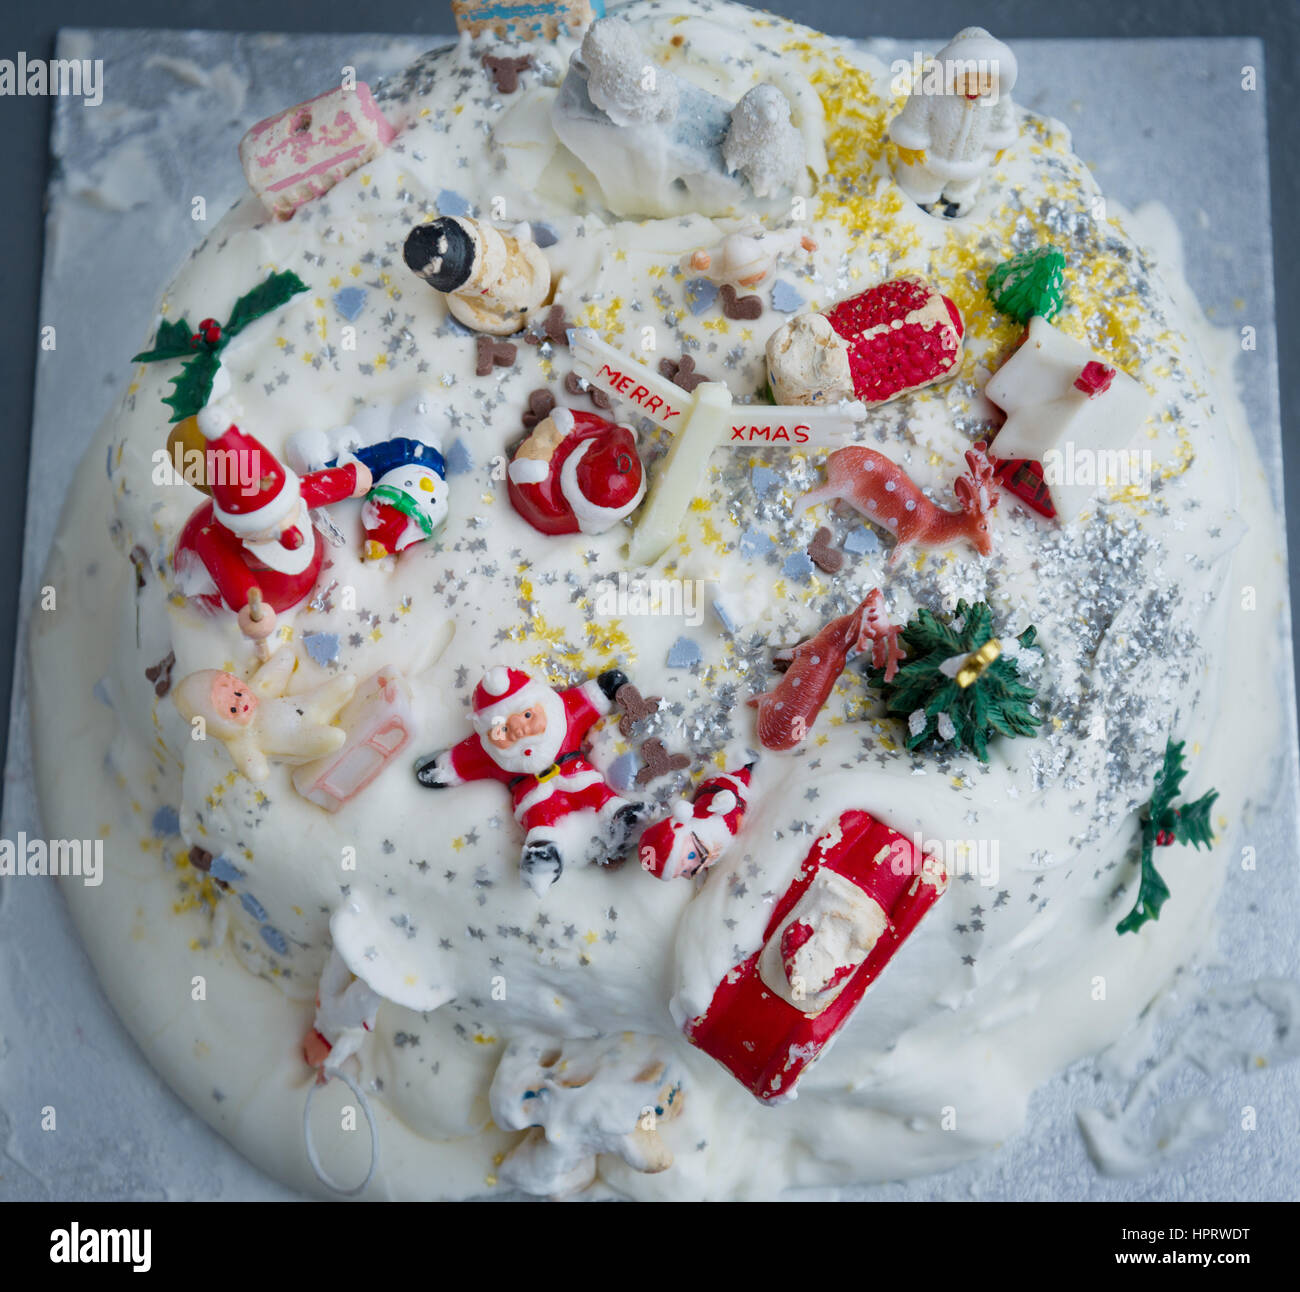 Jolly Santa Claus Cake Recipe - BettyCrocker.com